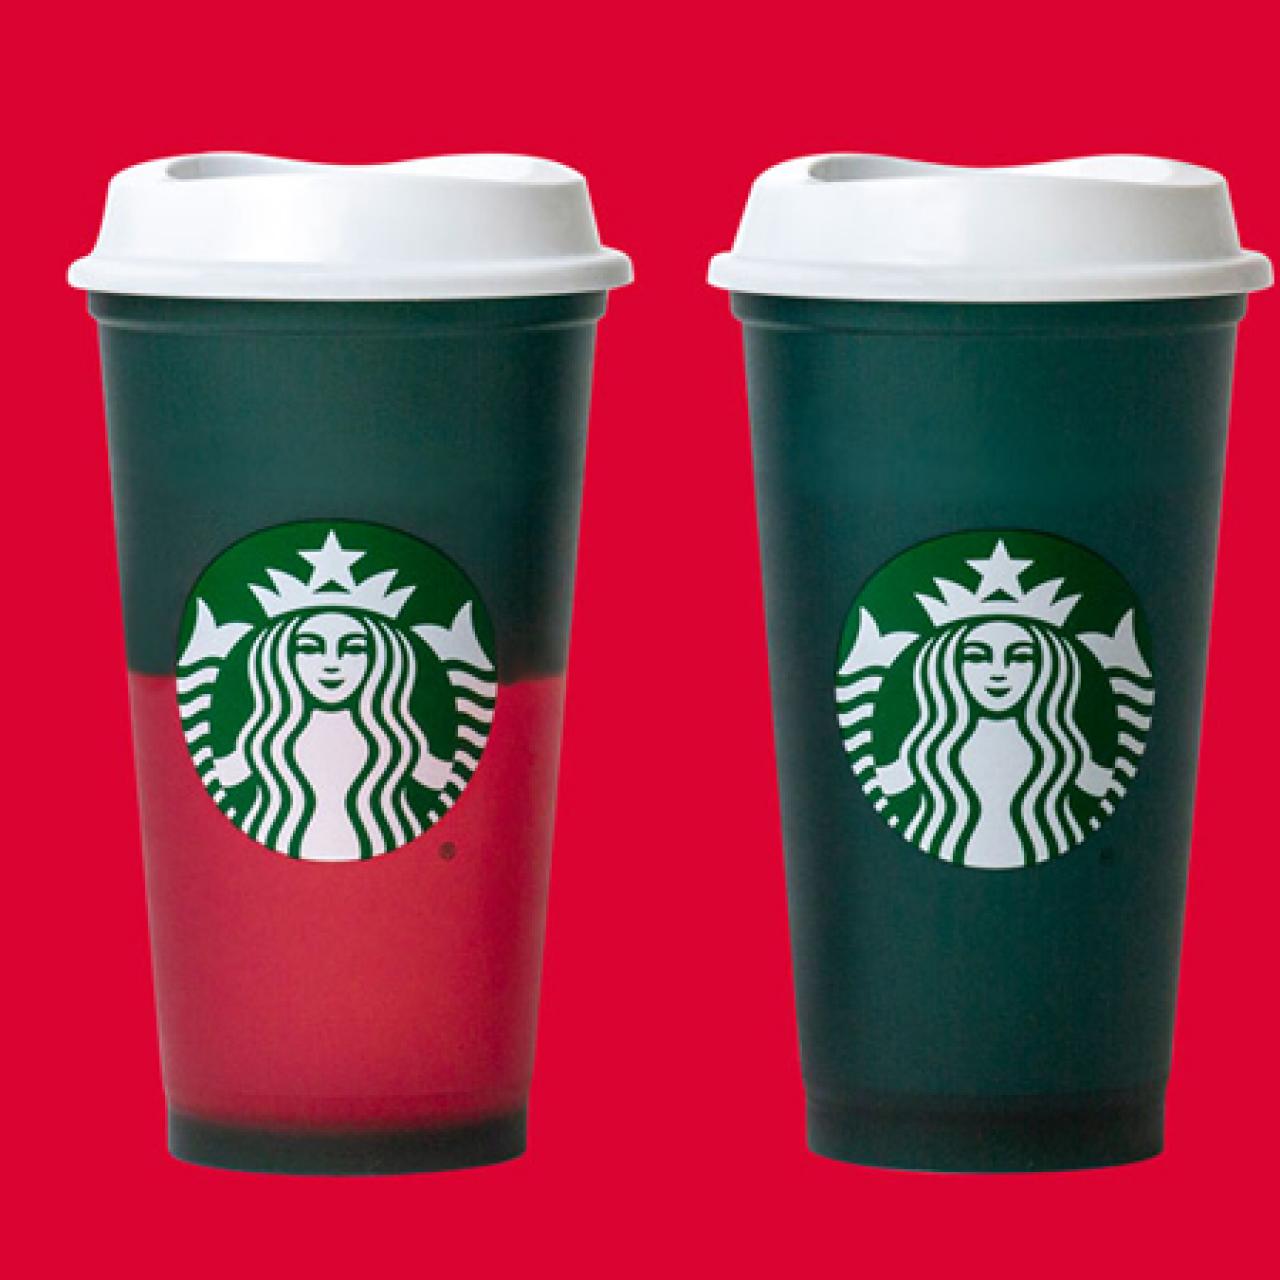 https://food.fnr.sndimg.com/content/dam/images/food/fullset/2020/11/11/Starbucks-Holiday-Color-Changing-Cup_s4x3.jpg.rend.hgtvcom.1280.1280.suffix/1605123721103.jpeg